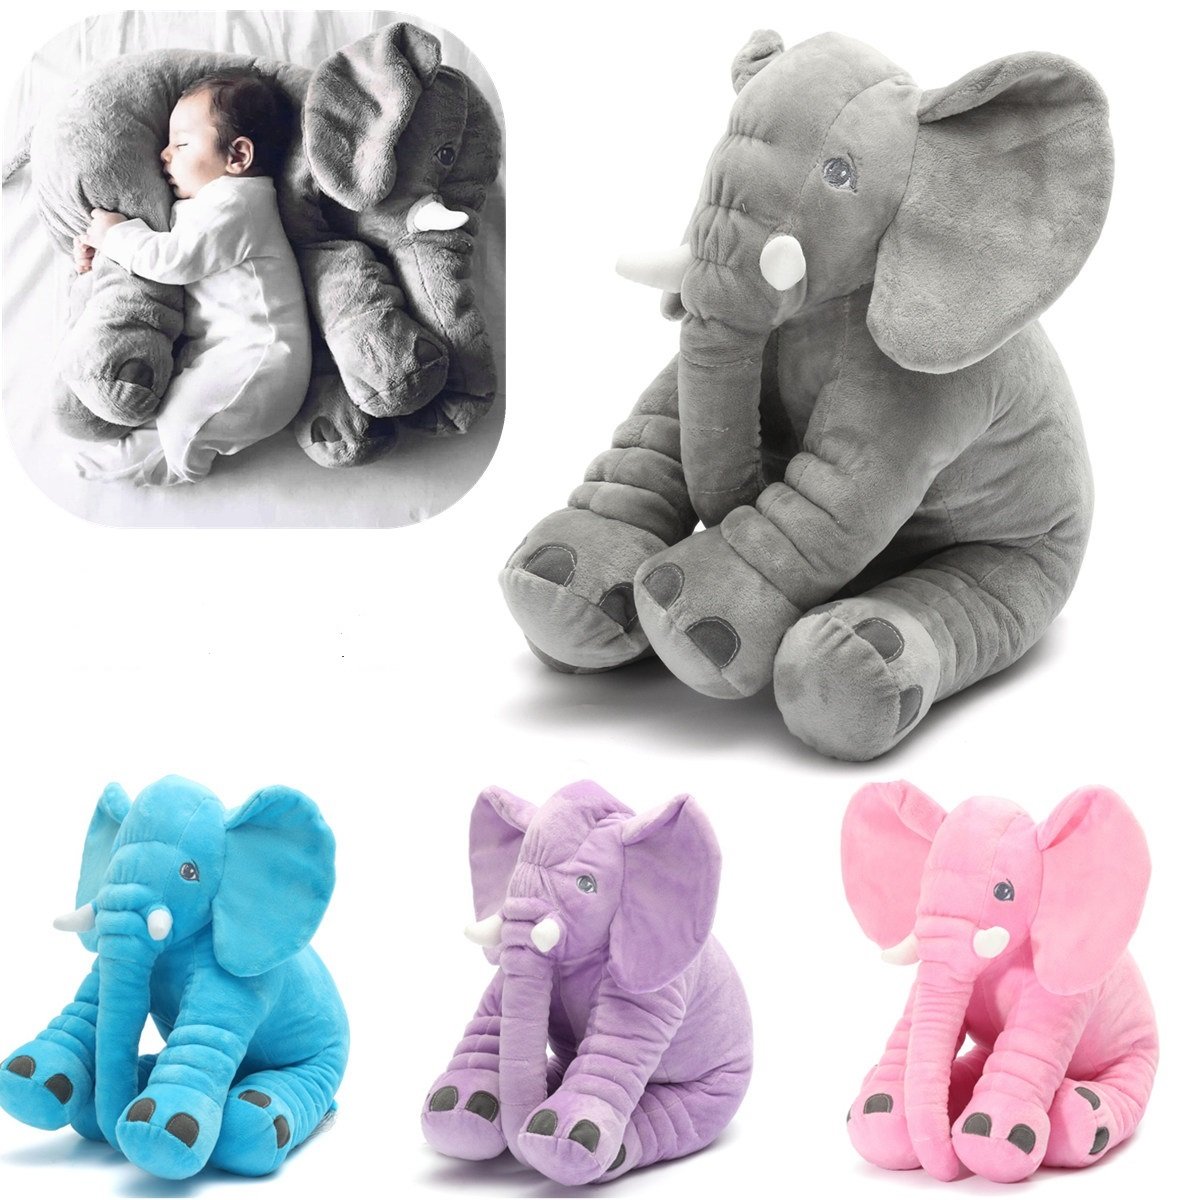 

Little Baby Children Long Nose Lumbar Elephant Sleeping Pillow Hold Doll Toys, Pink grey purple blue